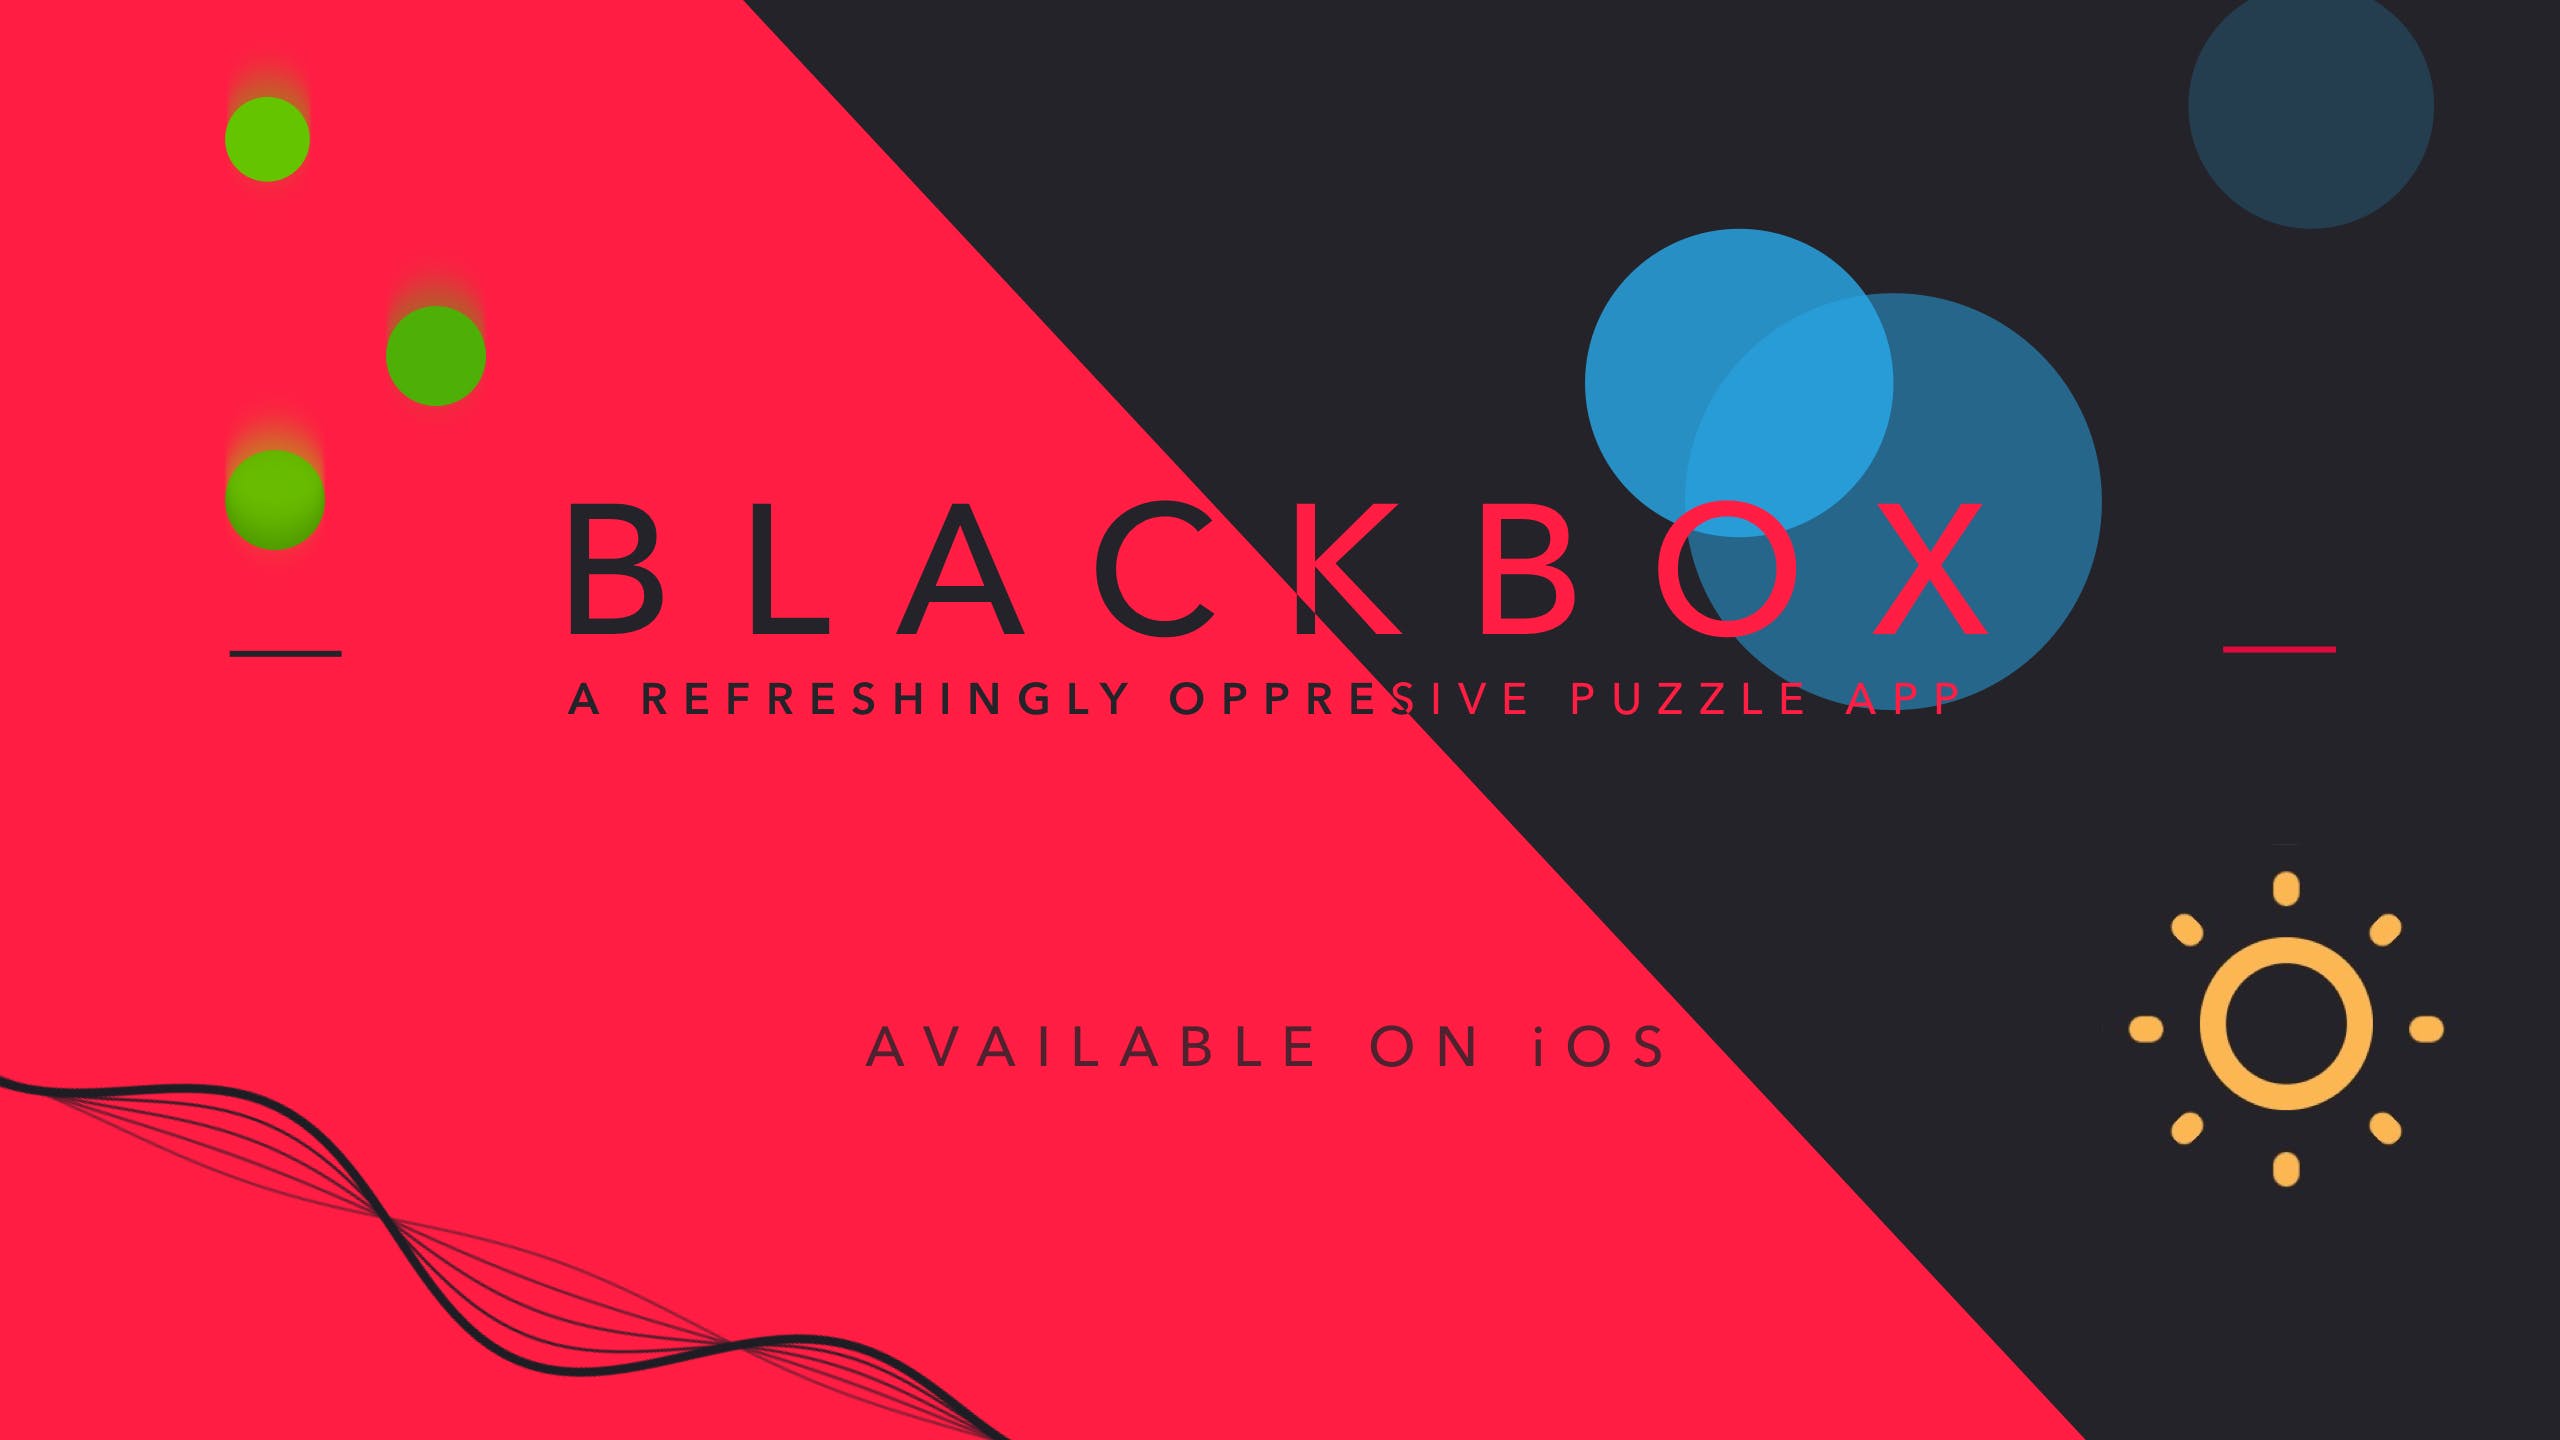 Blackbox media 1